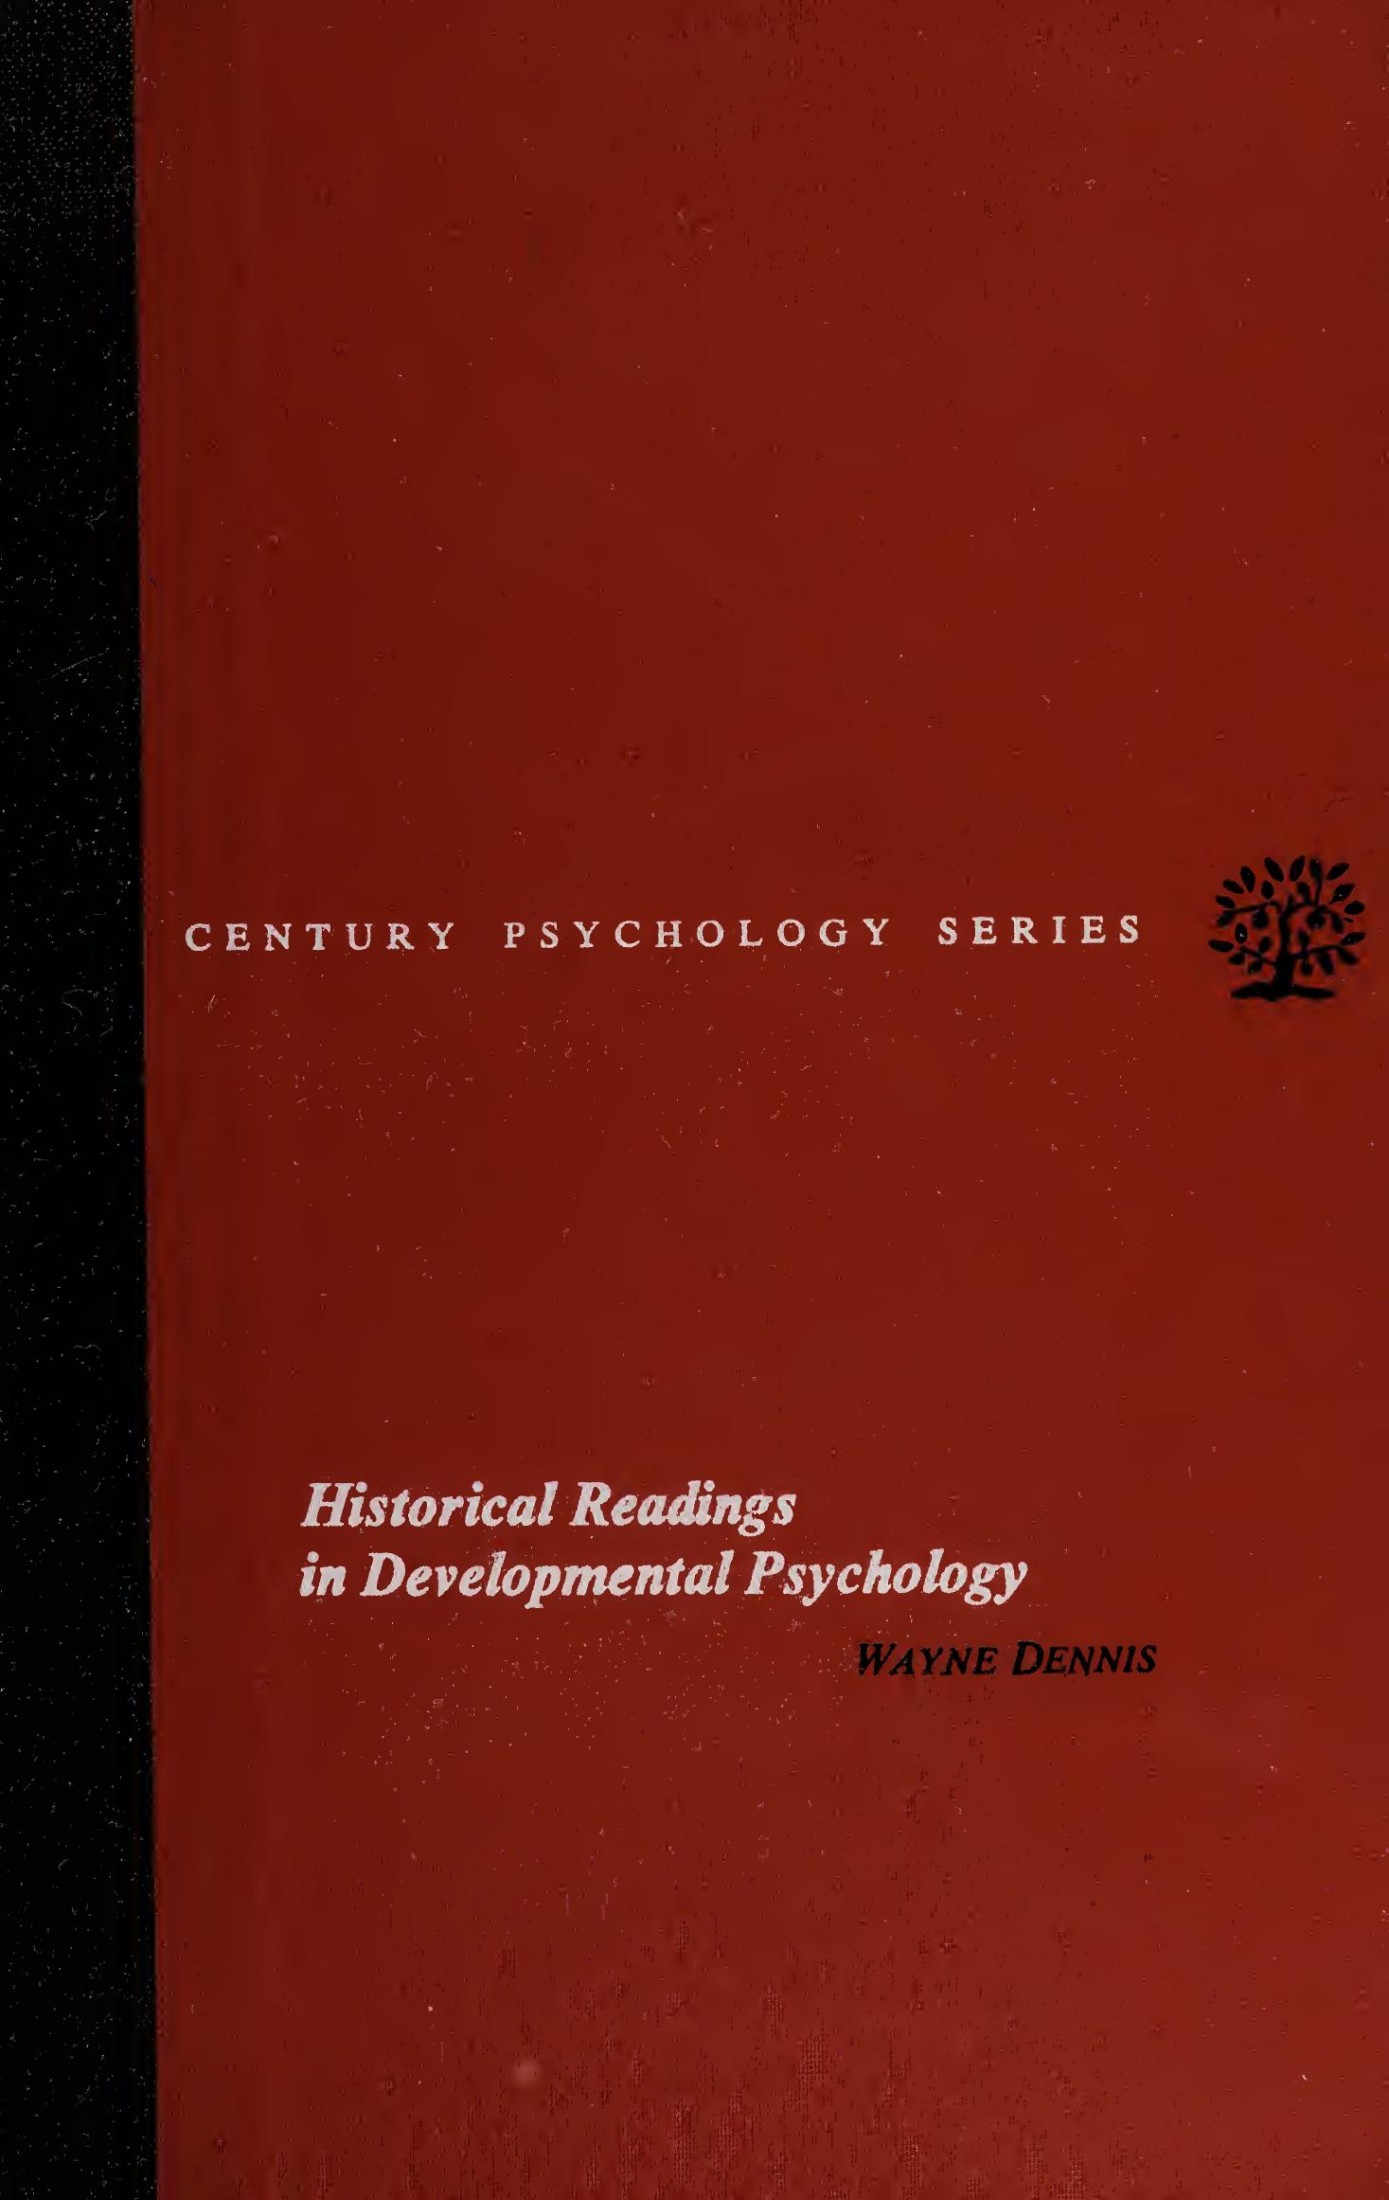 Historical readings in developmental psychology